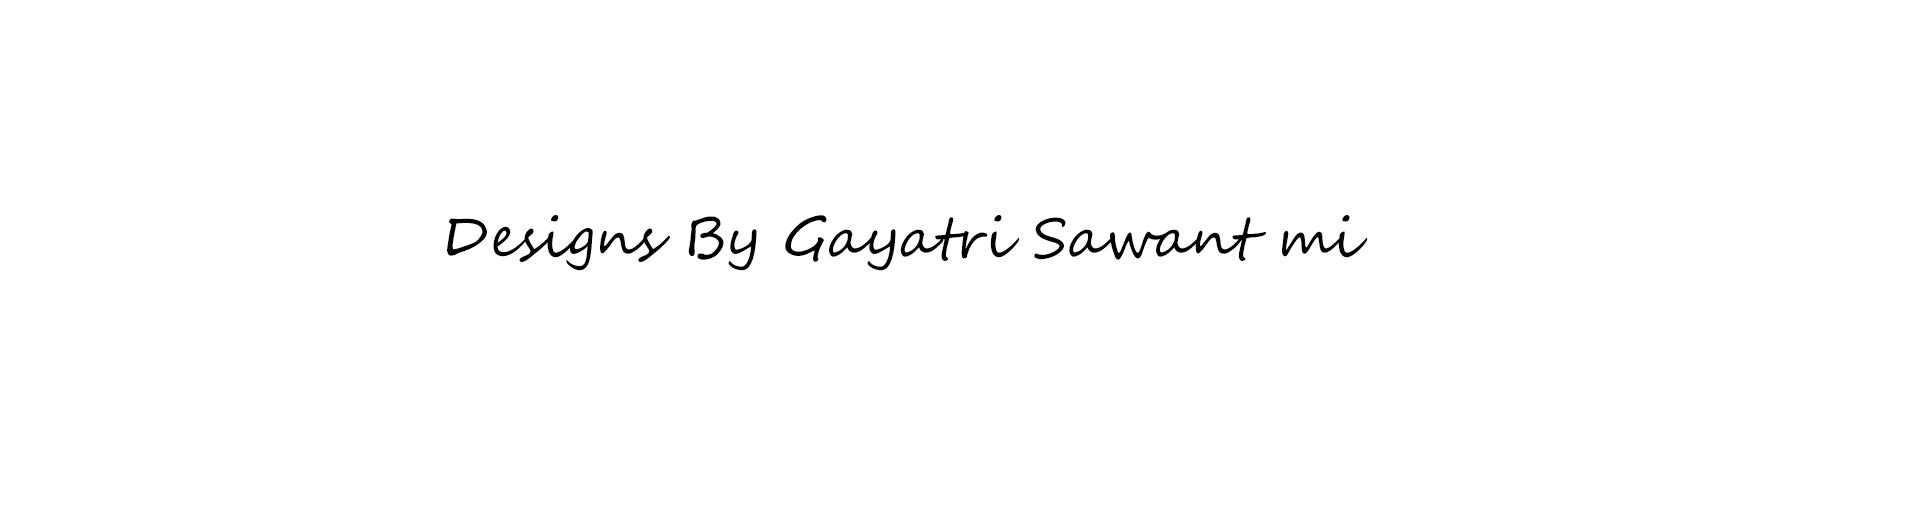 Gayatri Sawant mi